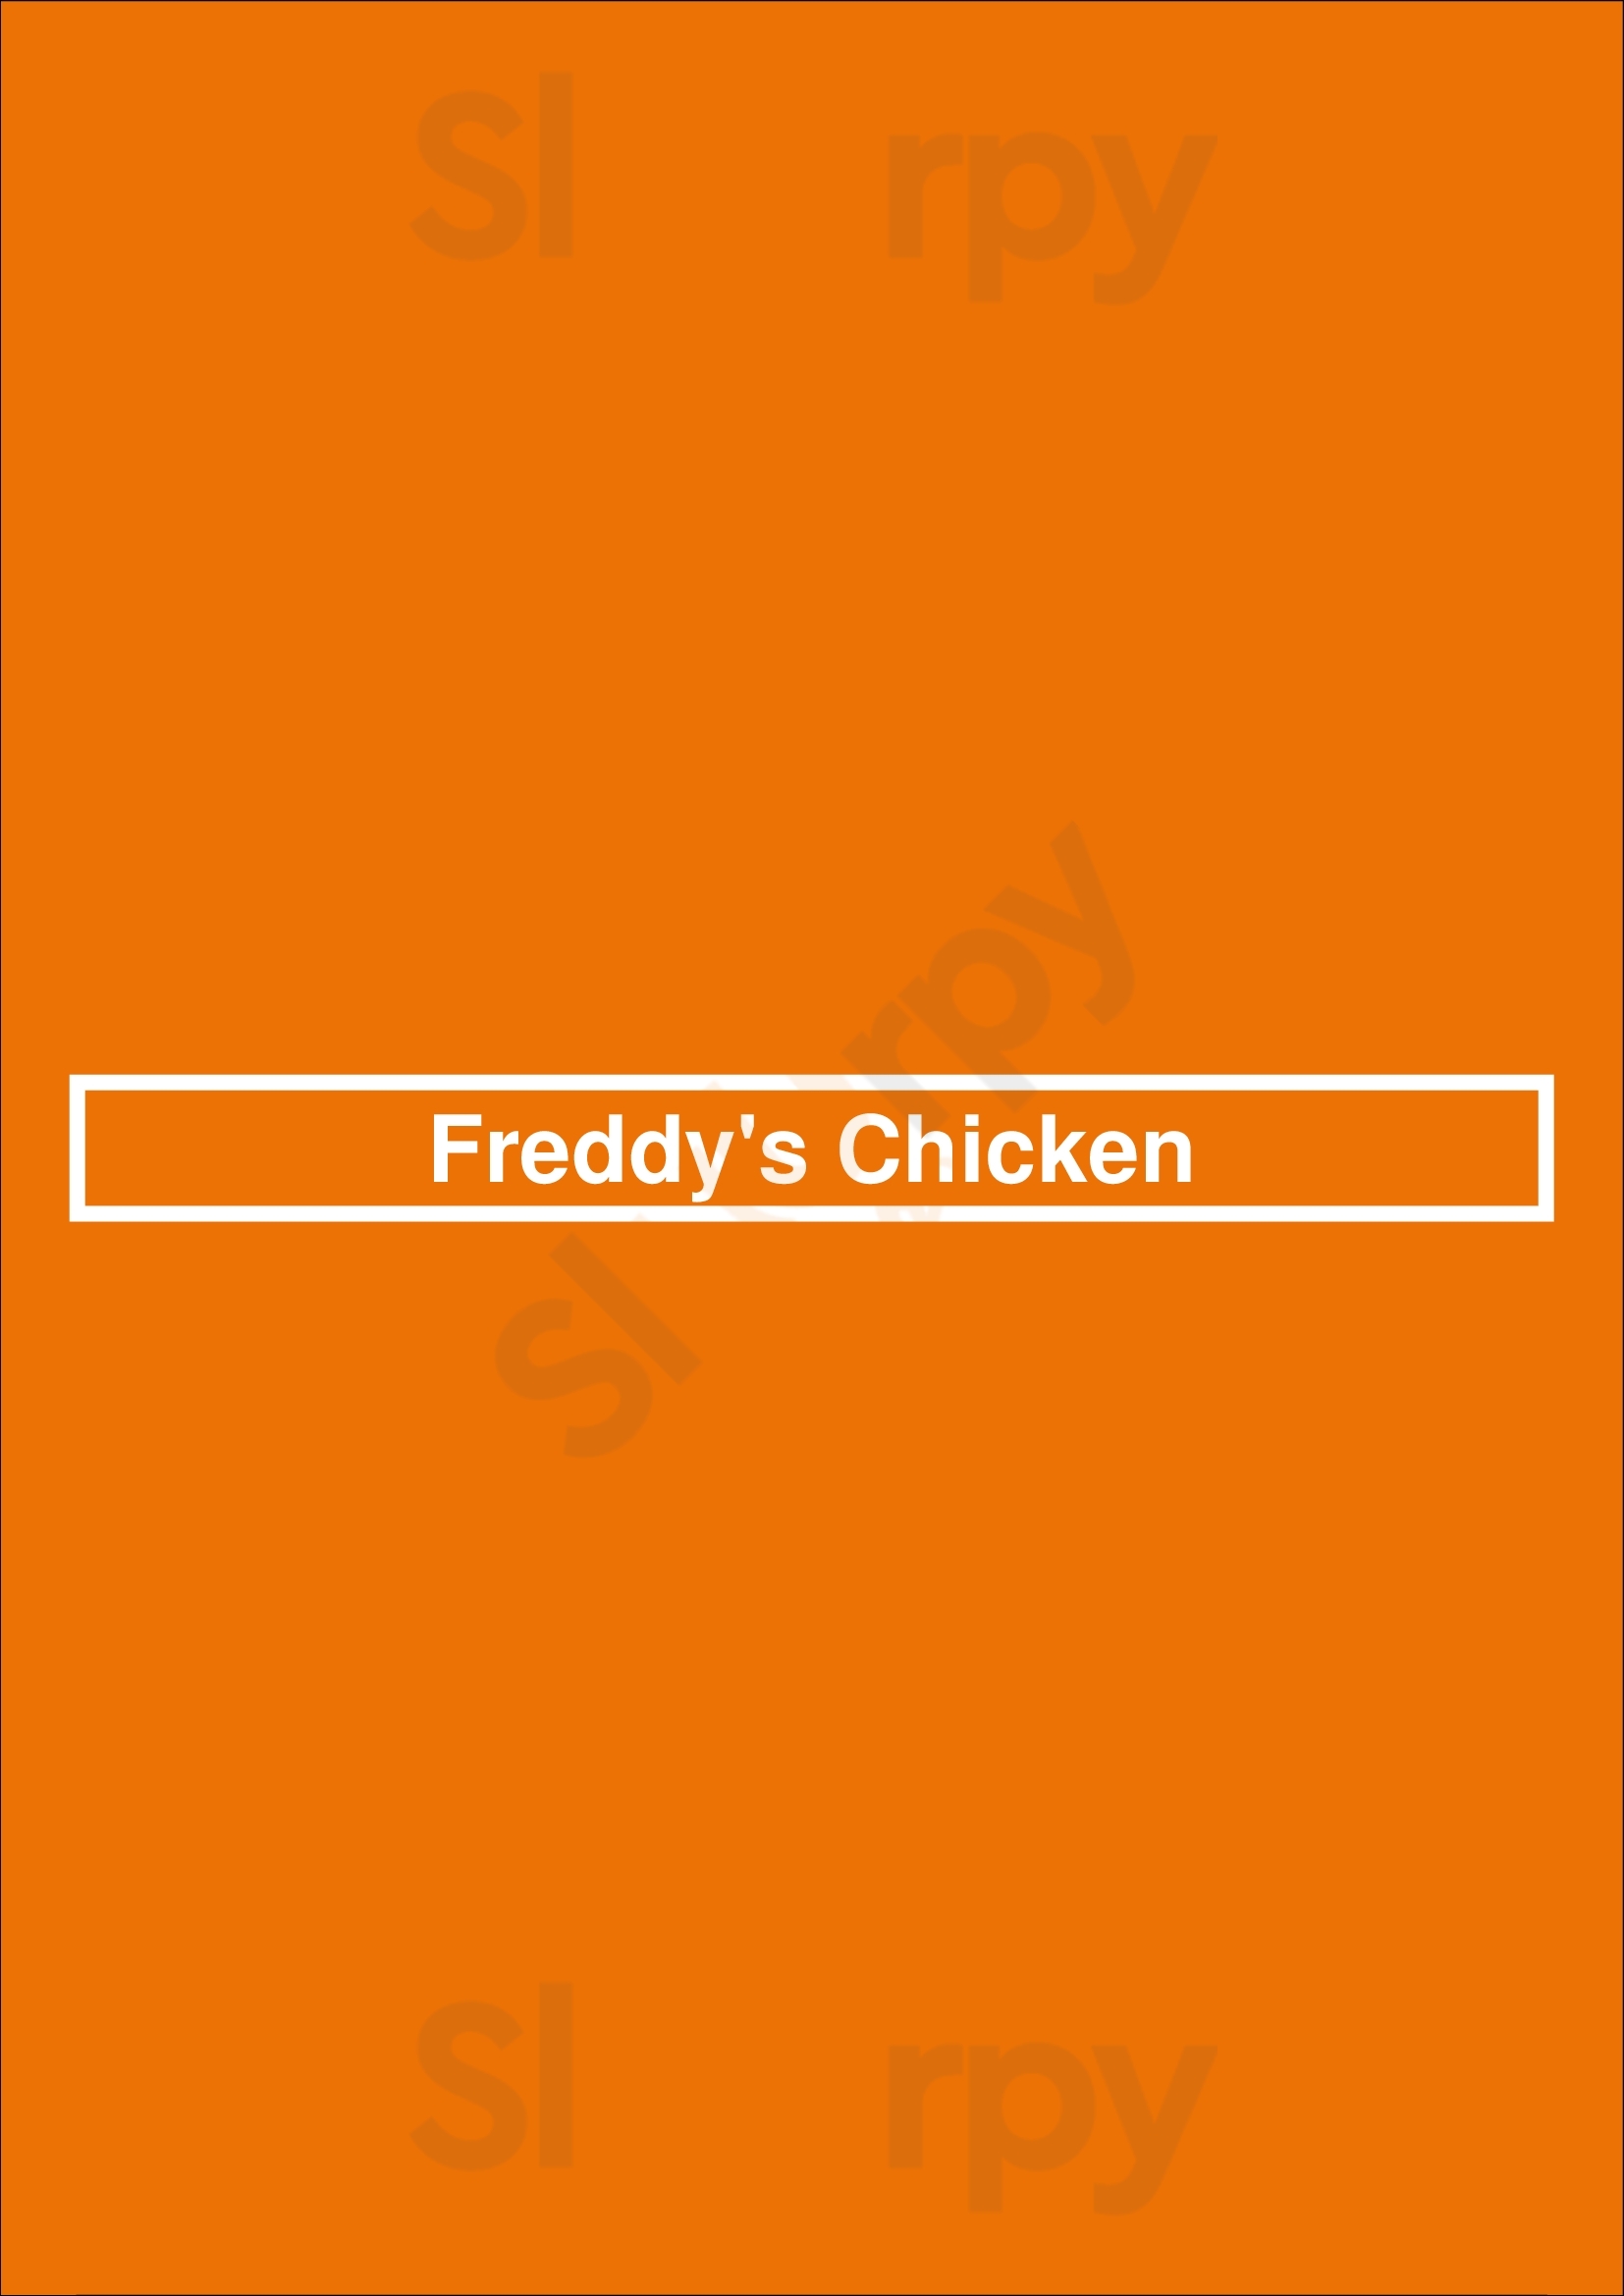 Freddy's Chicken Wakefield Menu - 1